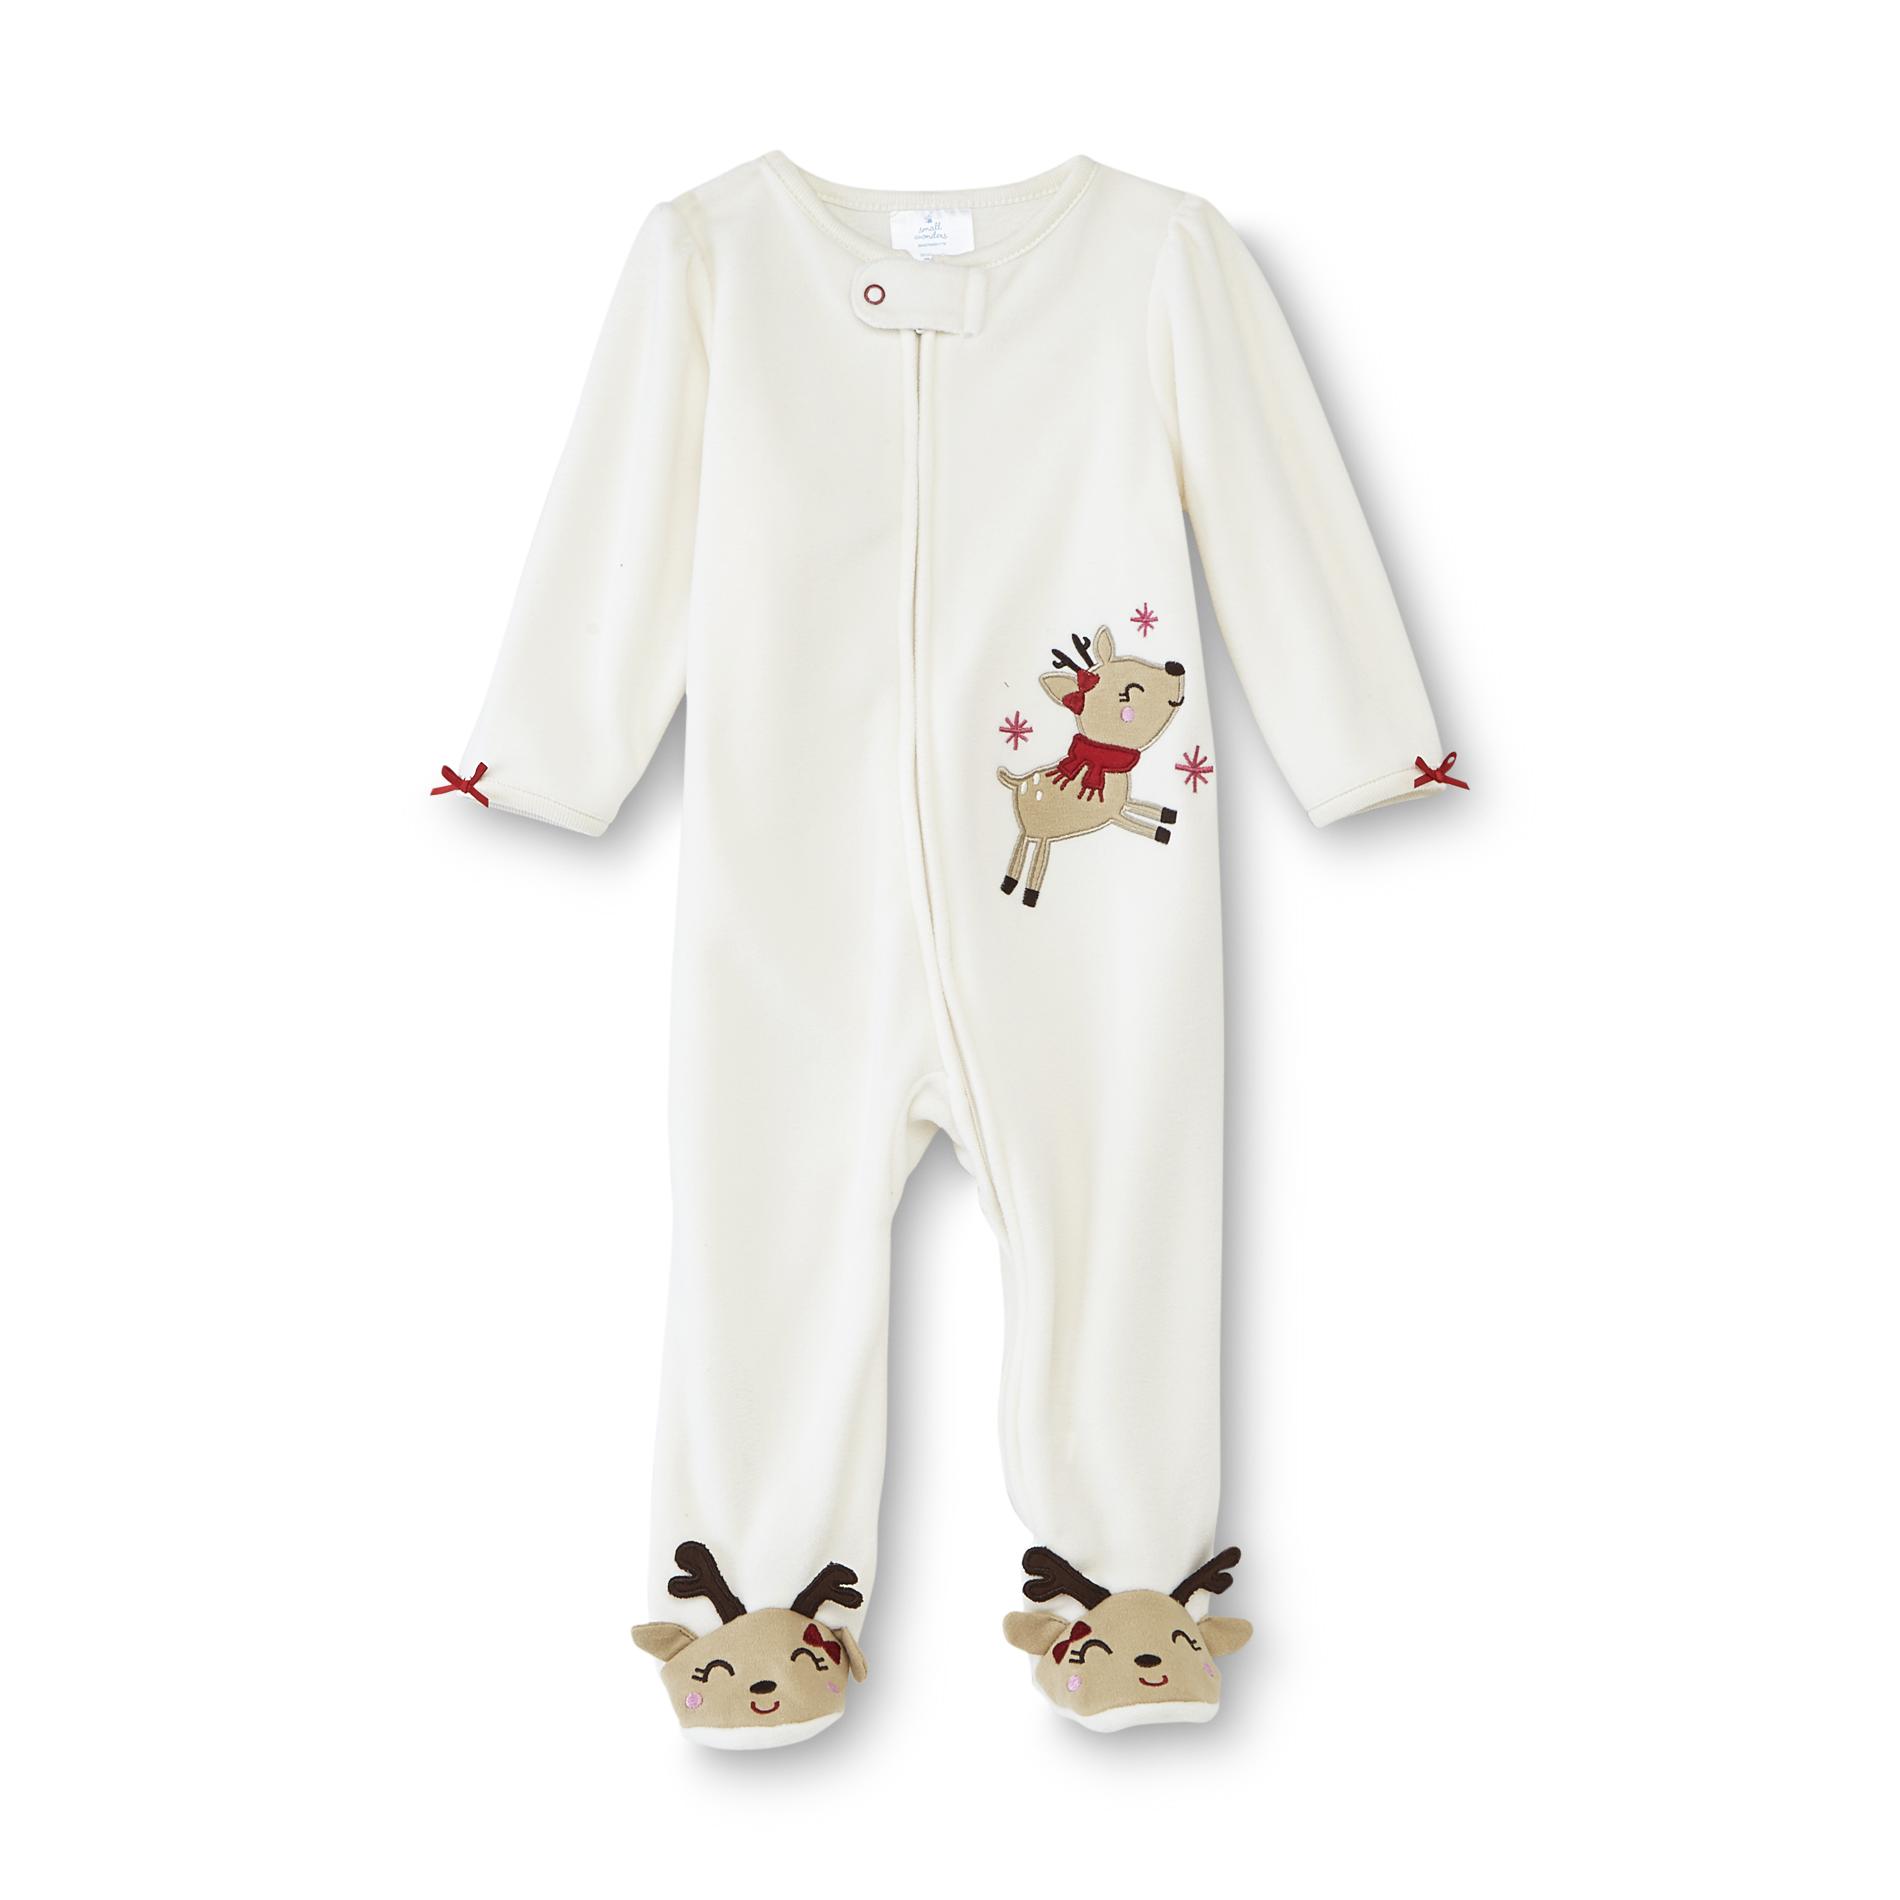 Small Wonders Newborn Girl's Fleece Sleeper Pajamas - Reindeer